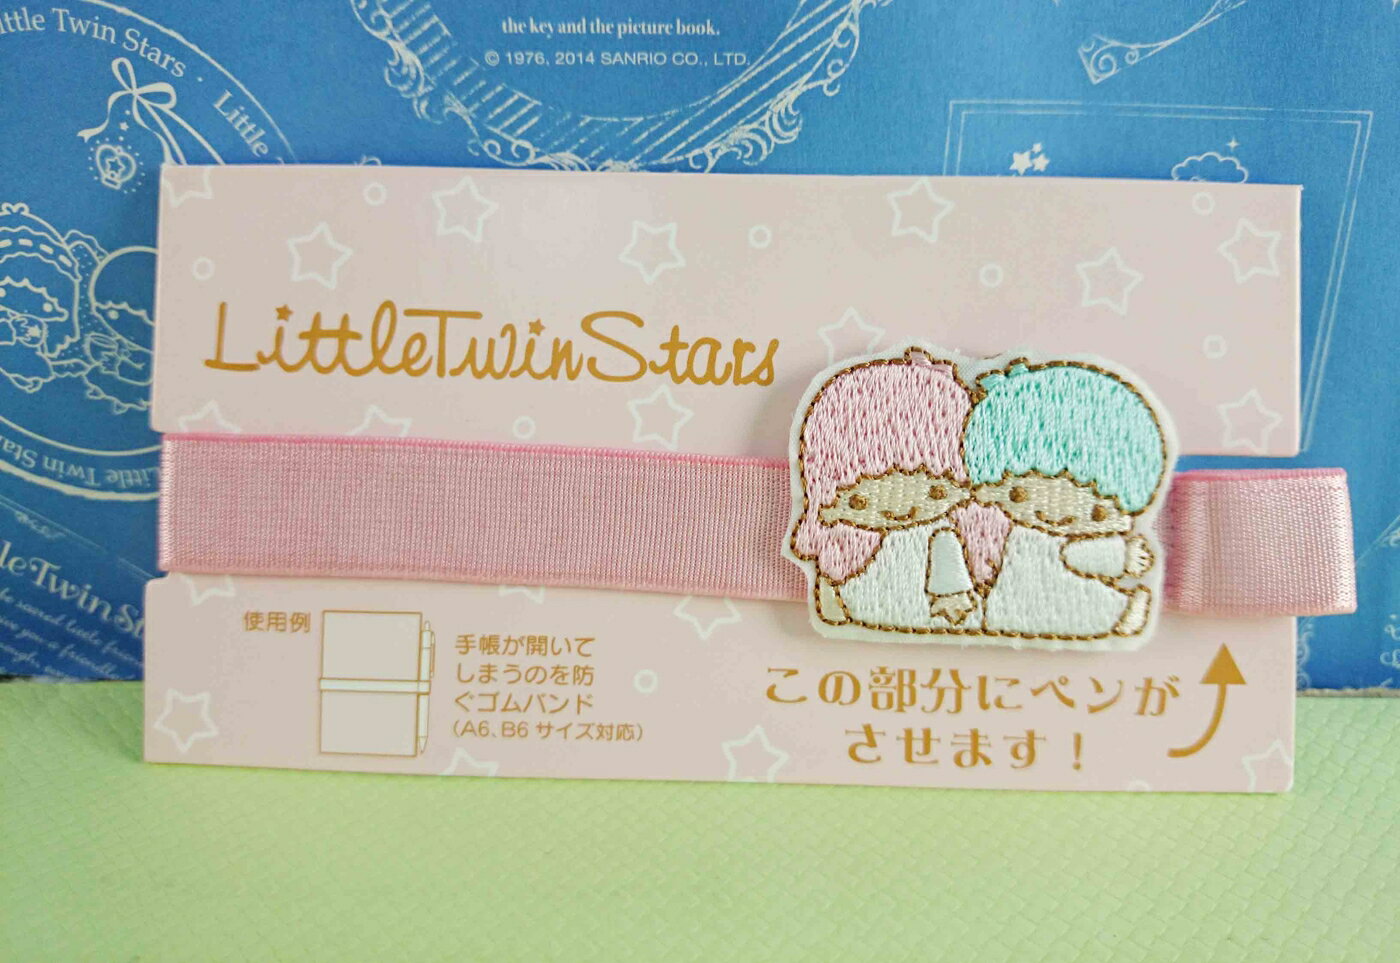 【震撼精品百貨】Little Twin Stars KiKi&LaLa 雙子星小天使 伸縮帶 震撼日式精品百貨